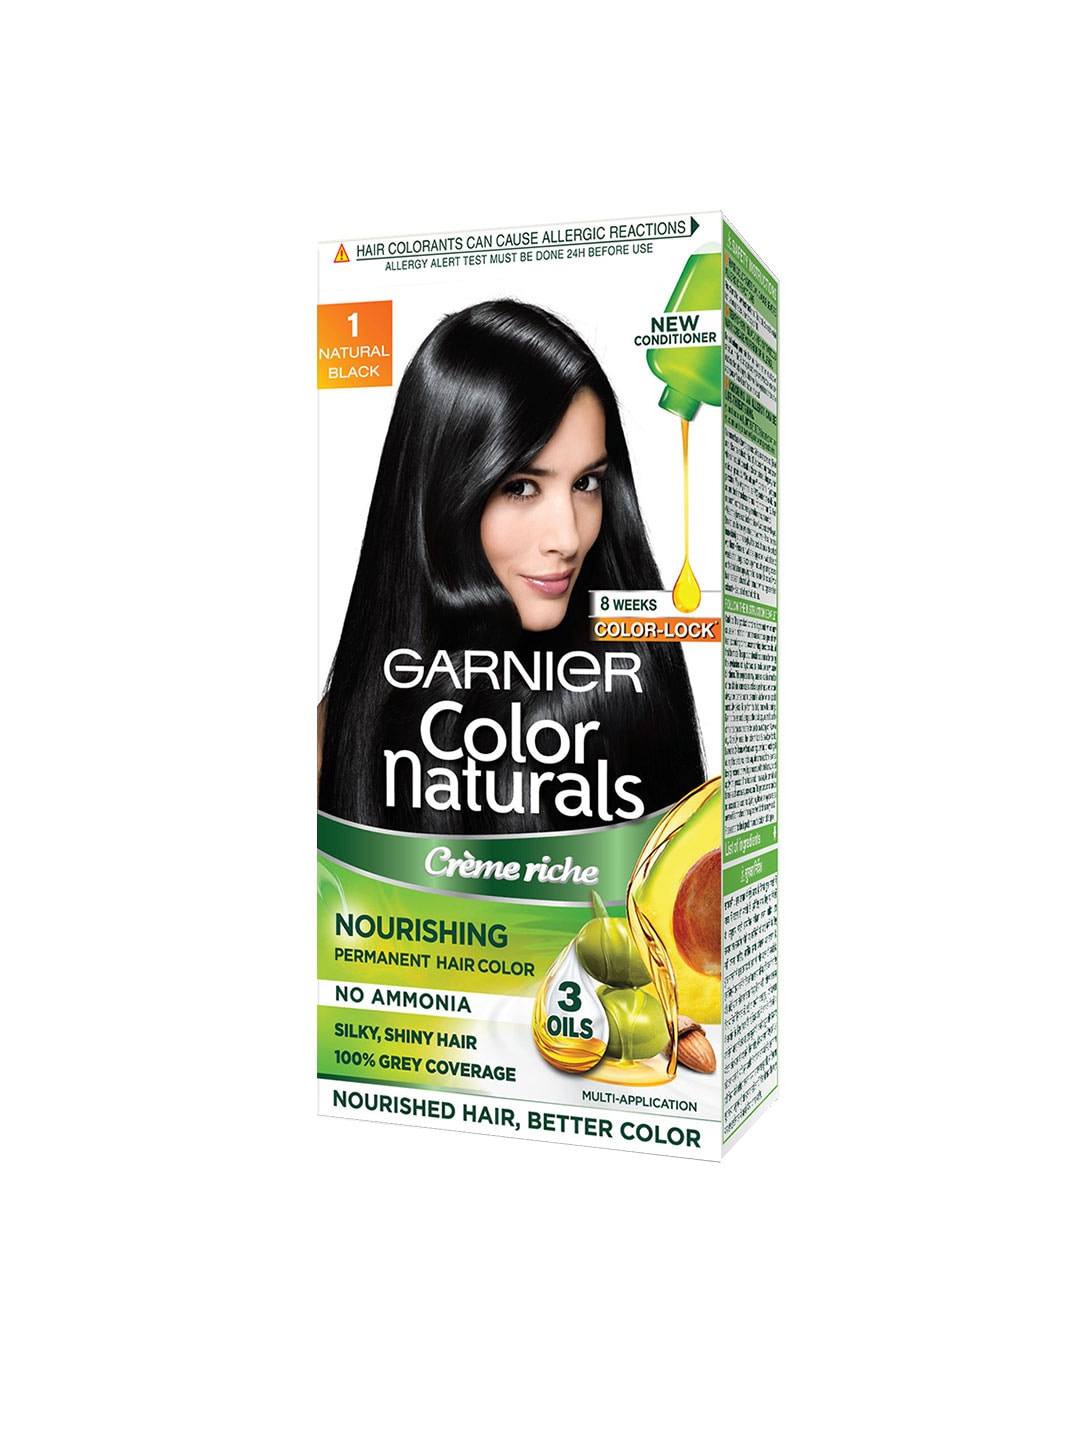 Garnier Color Naturals Creme Hair Color - 1 Natural Black 70 ml + 60 g Price in India